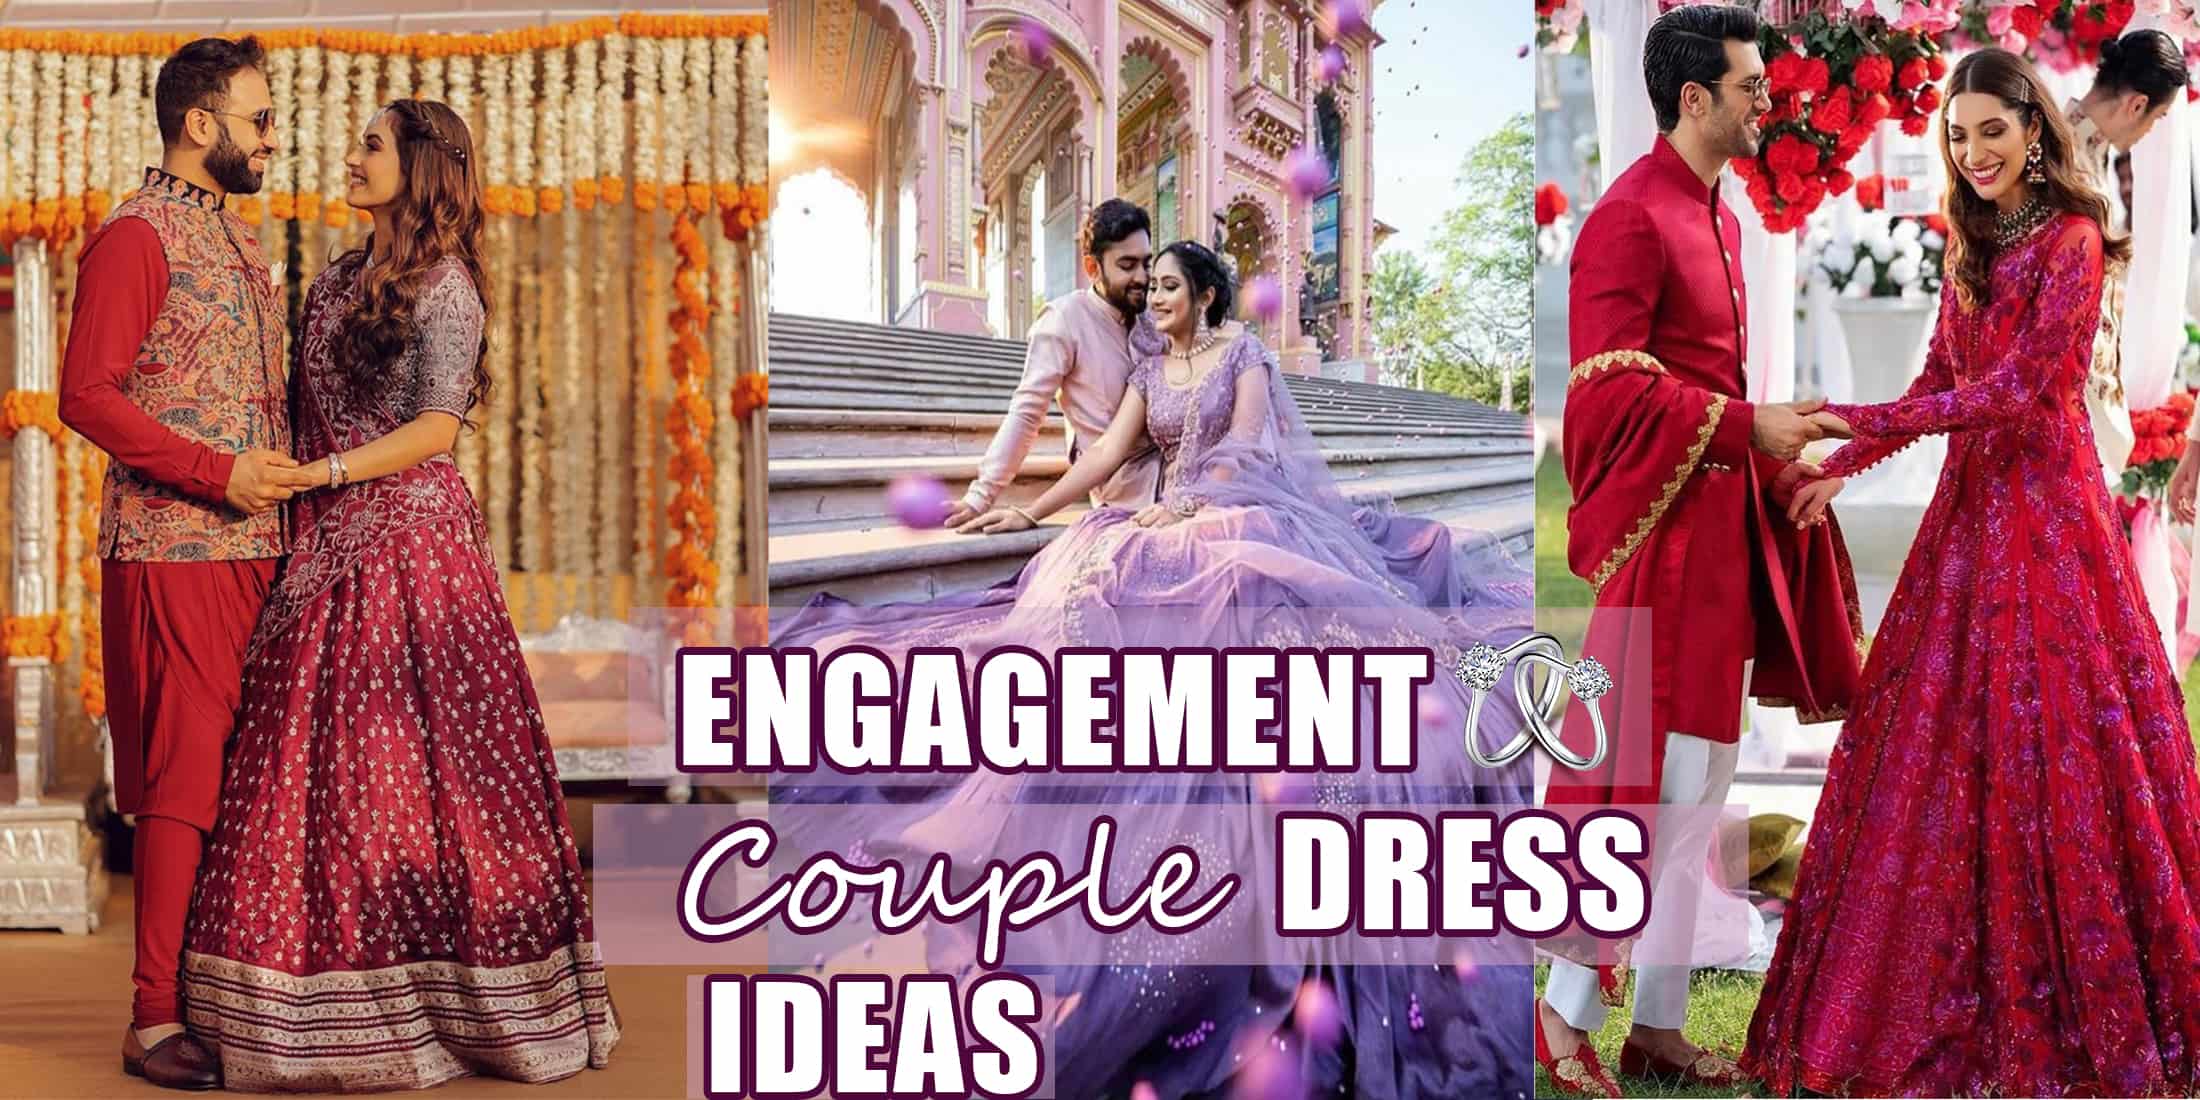 Men Engagement Dresses Ideas From Latest Fashion